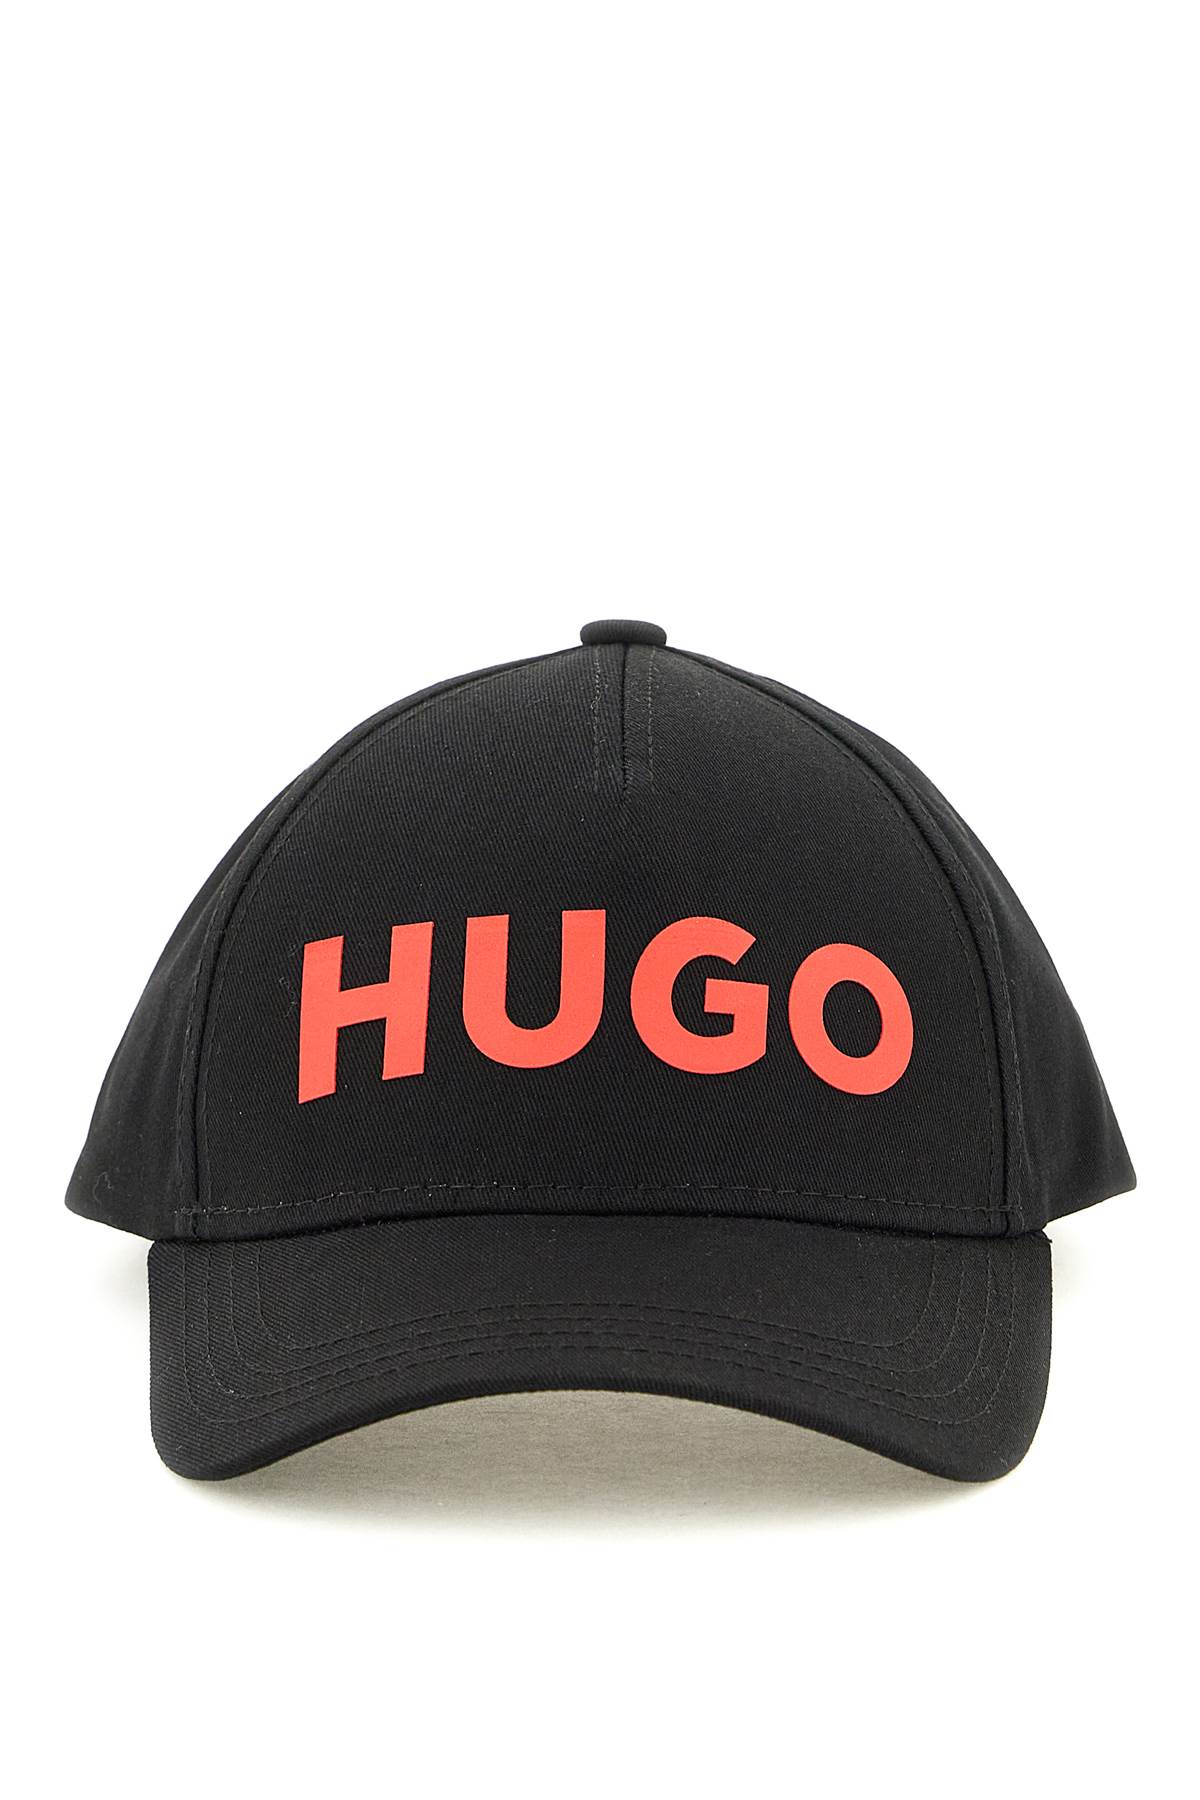 HUGO BOSS BASEBALL CAP WITH LOGO PRINT